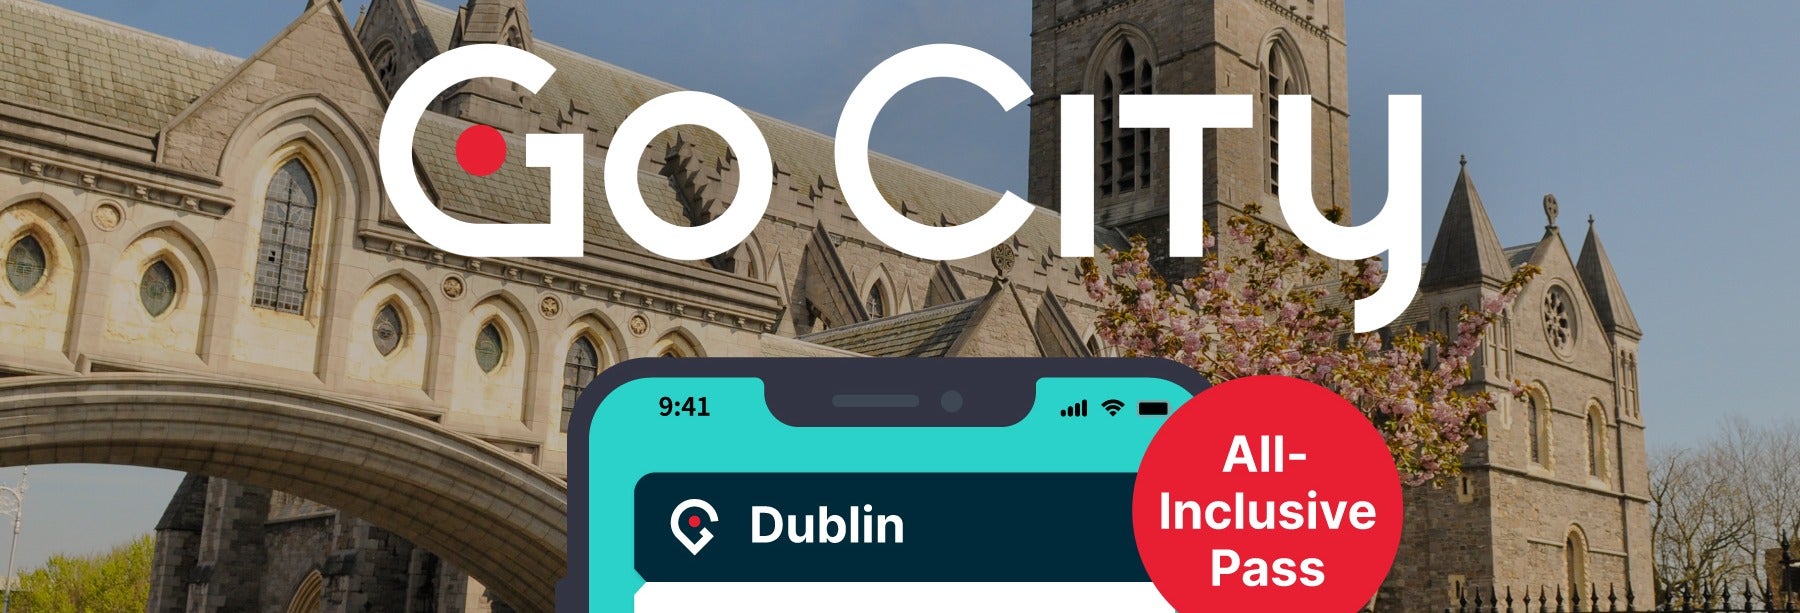 Go City: Dublin All-Inclusive Pass